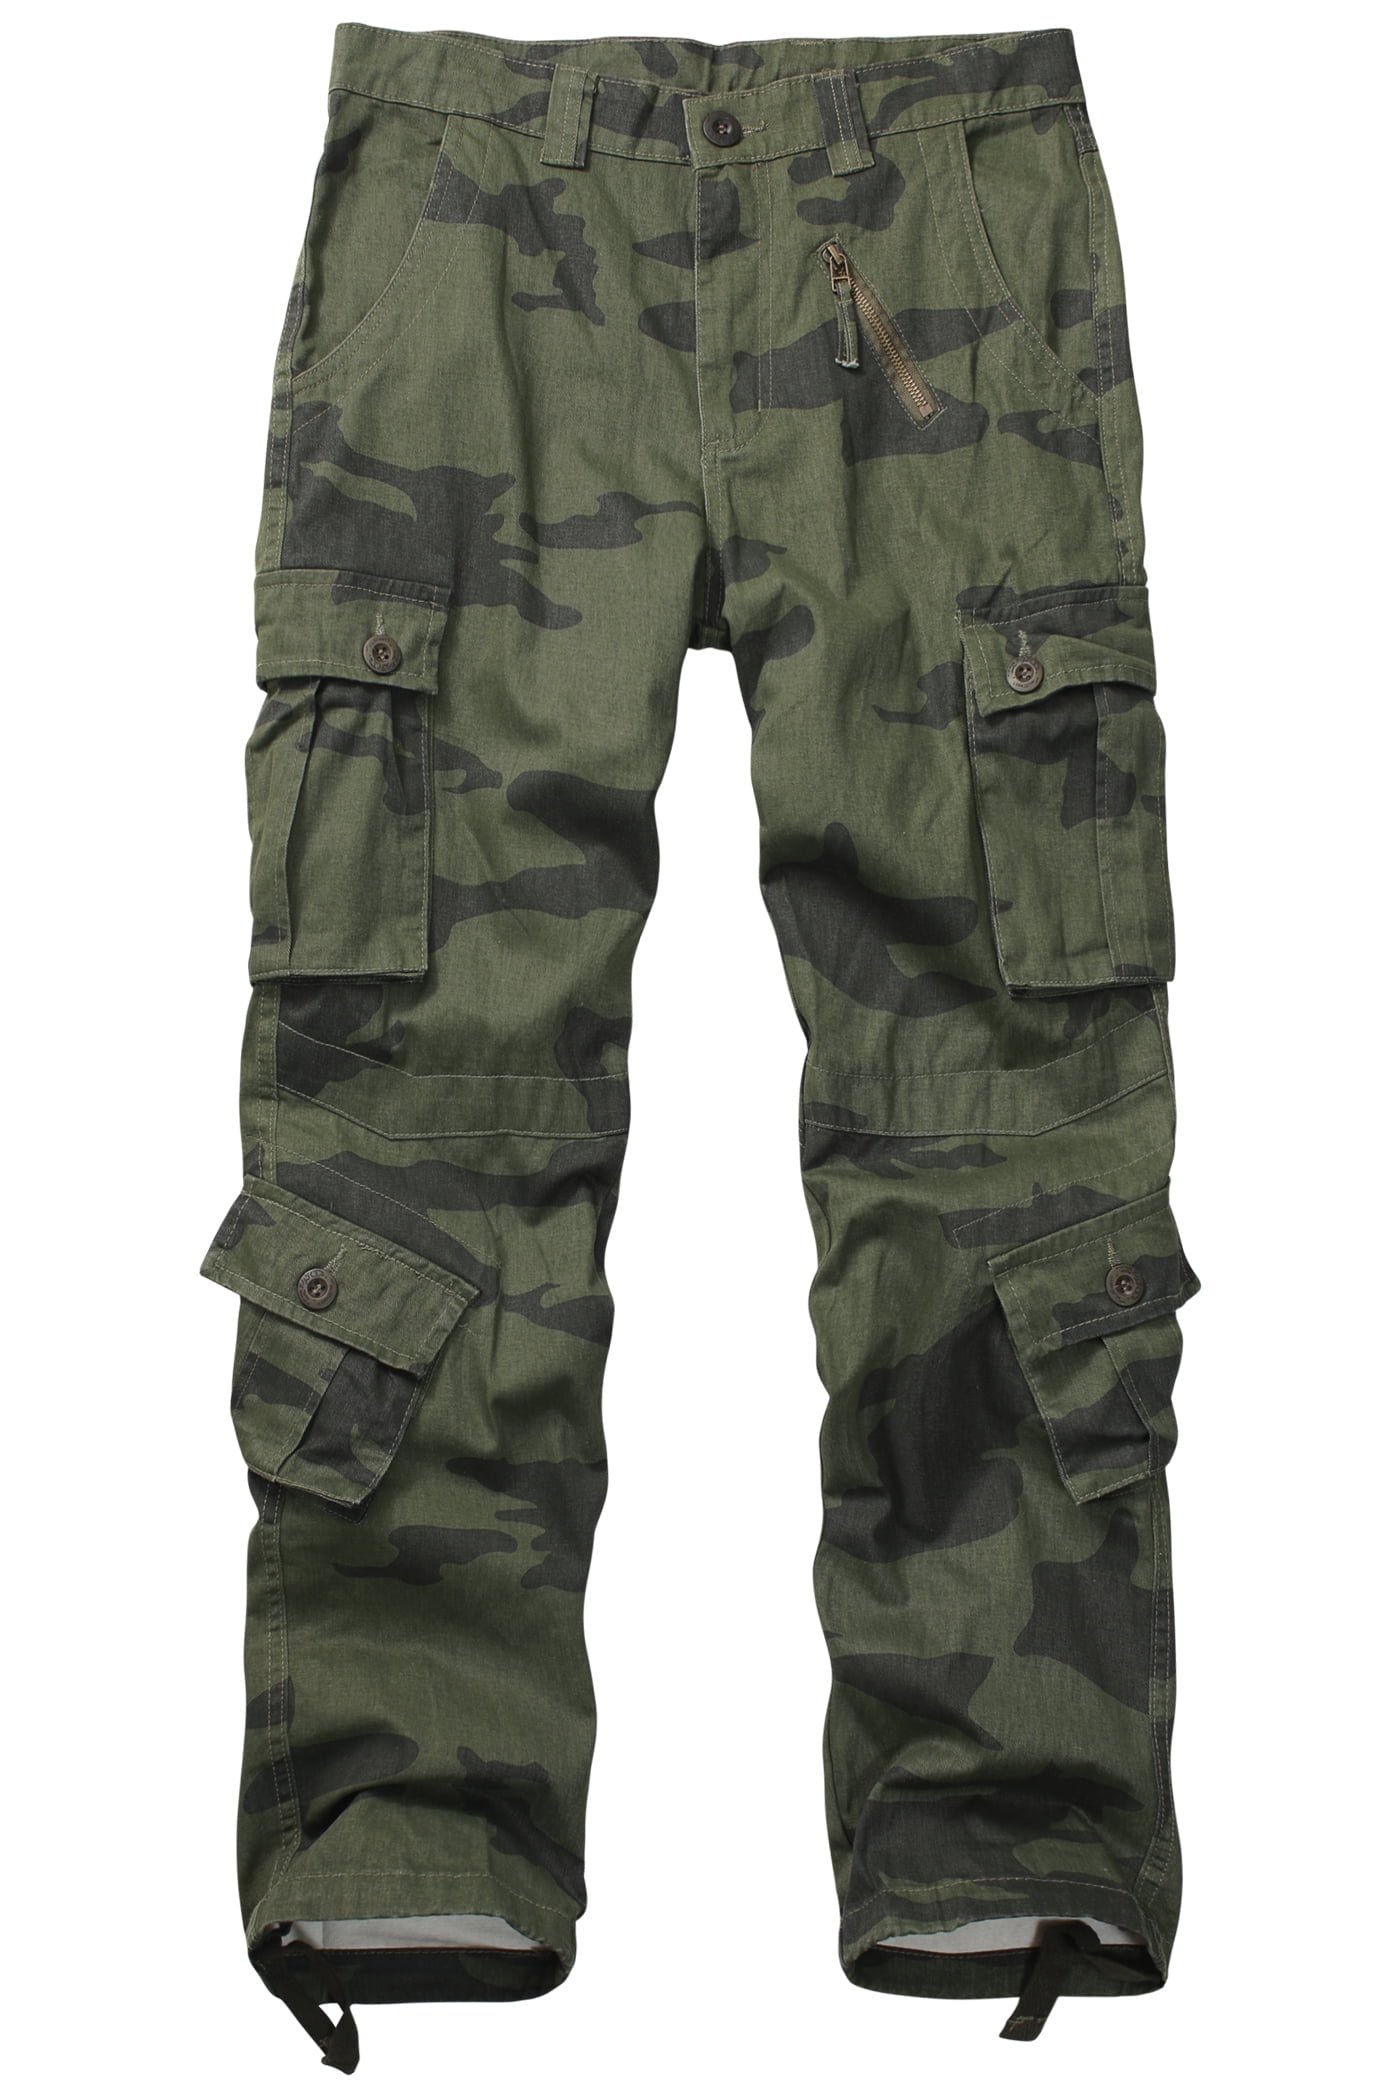 TRGPSG Men's Camo Cargo Pants with 8-Pockets Regular Fit Cotton Cargo ...